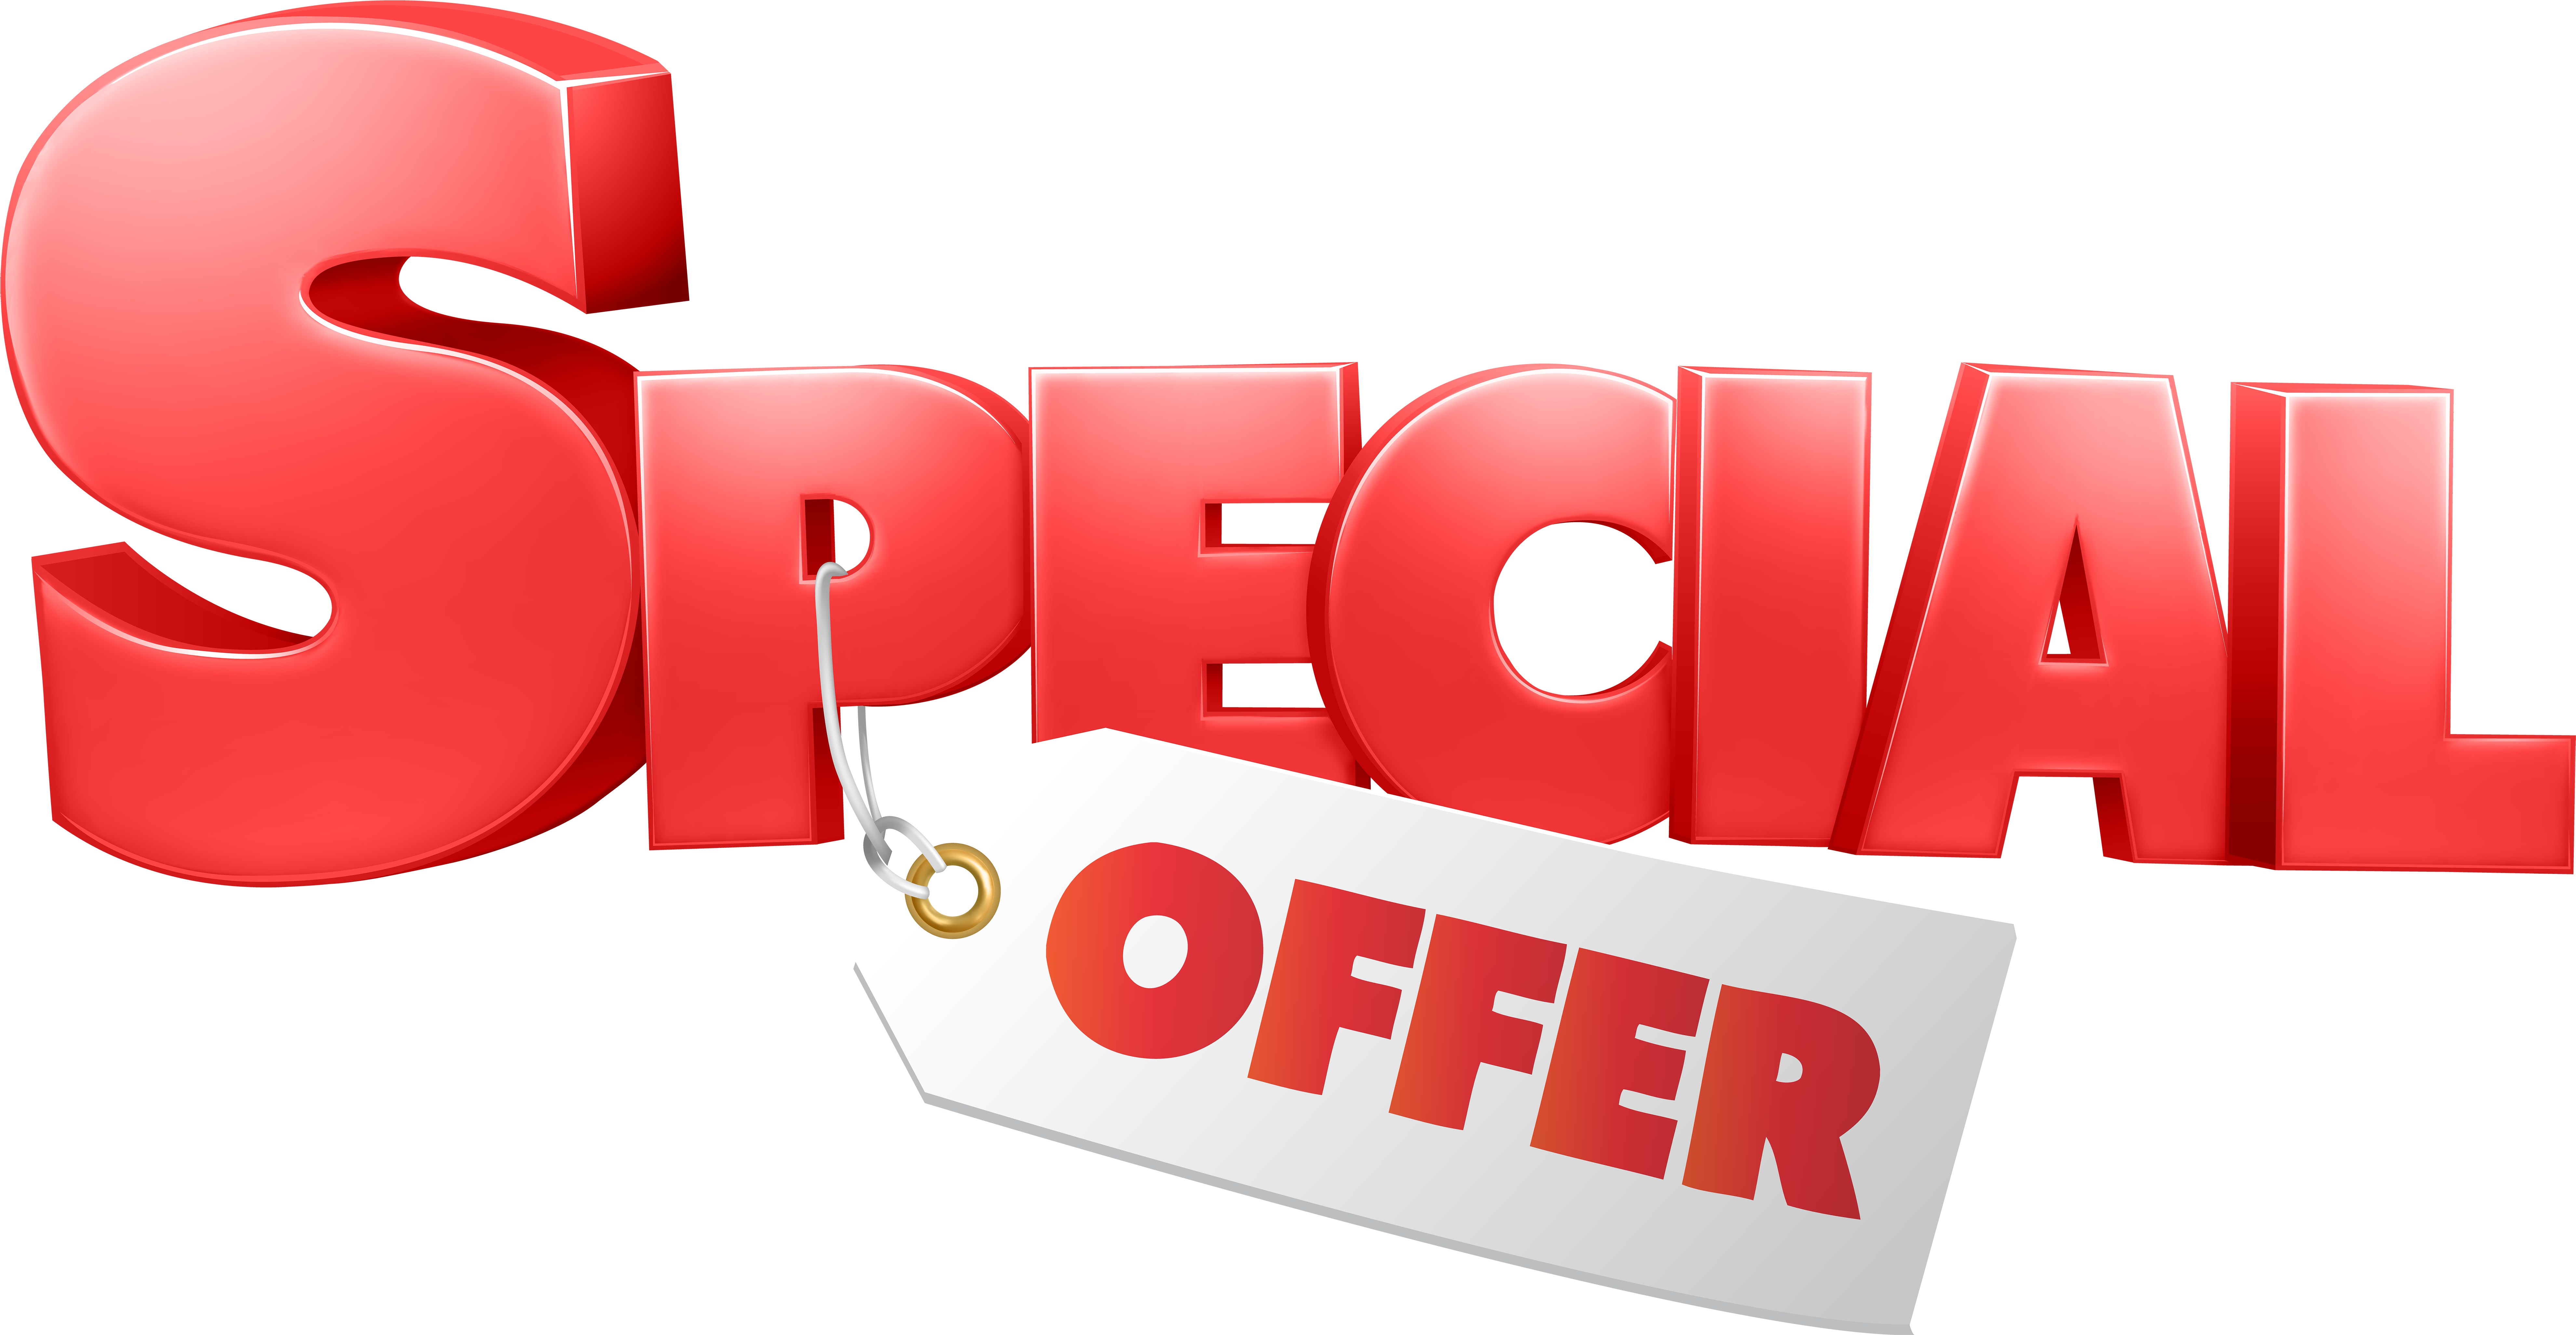 Special Offer Png Clip Art Image Png Download - Transparent Special Offer Png, Png Download